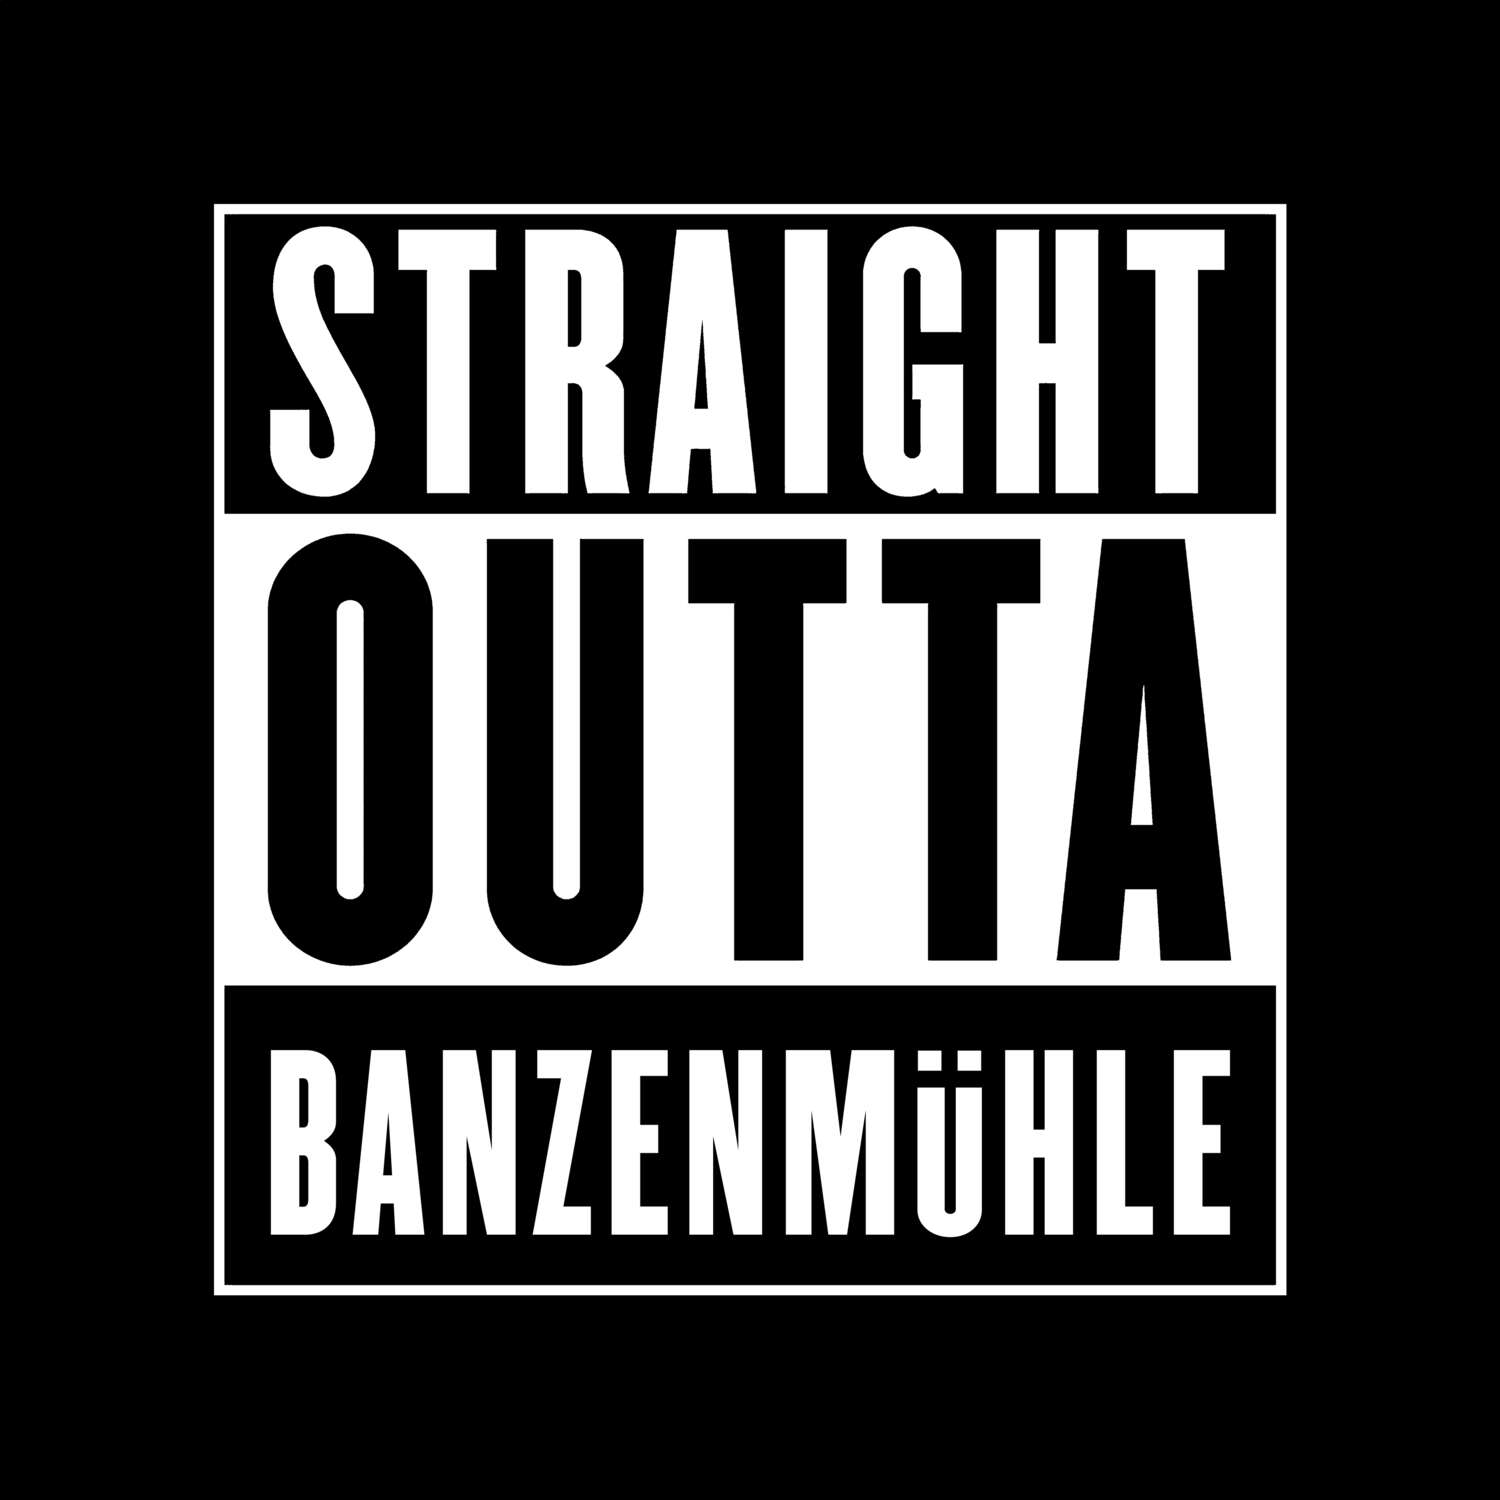 Banzenmühle T-Shirt »Straight Outta«